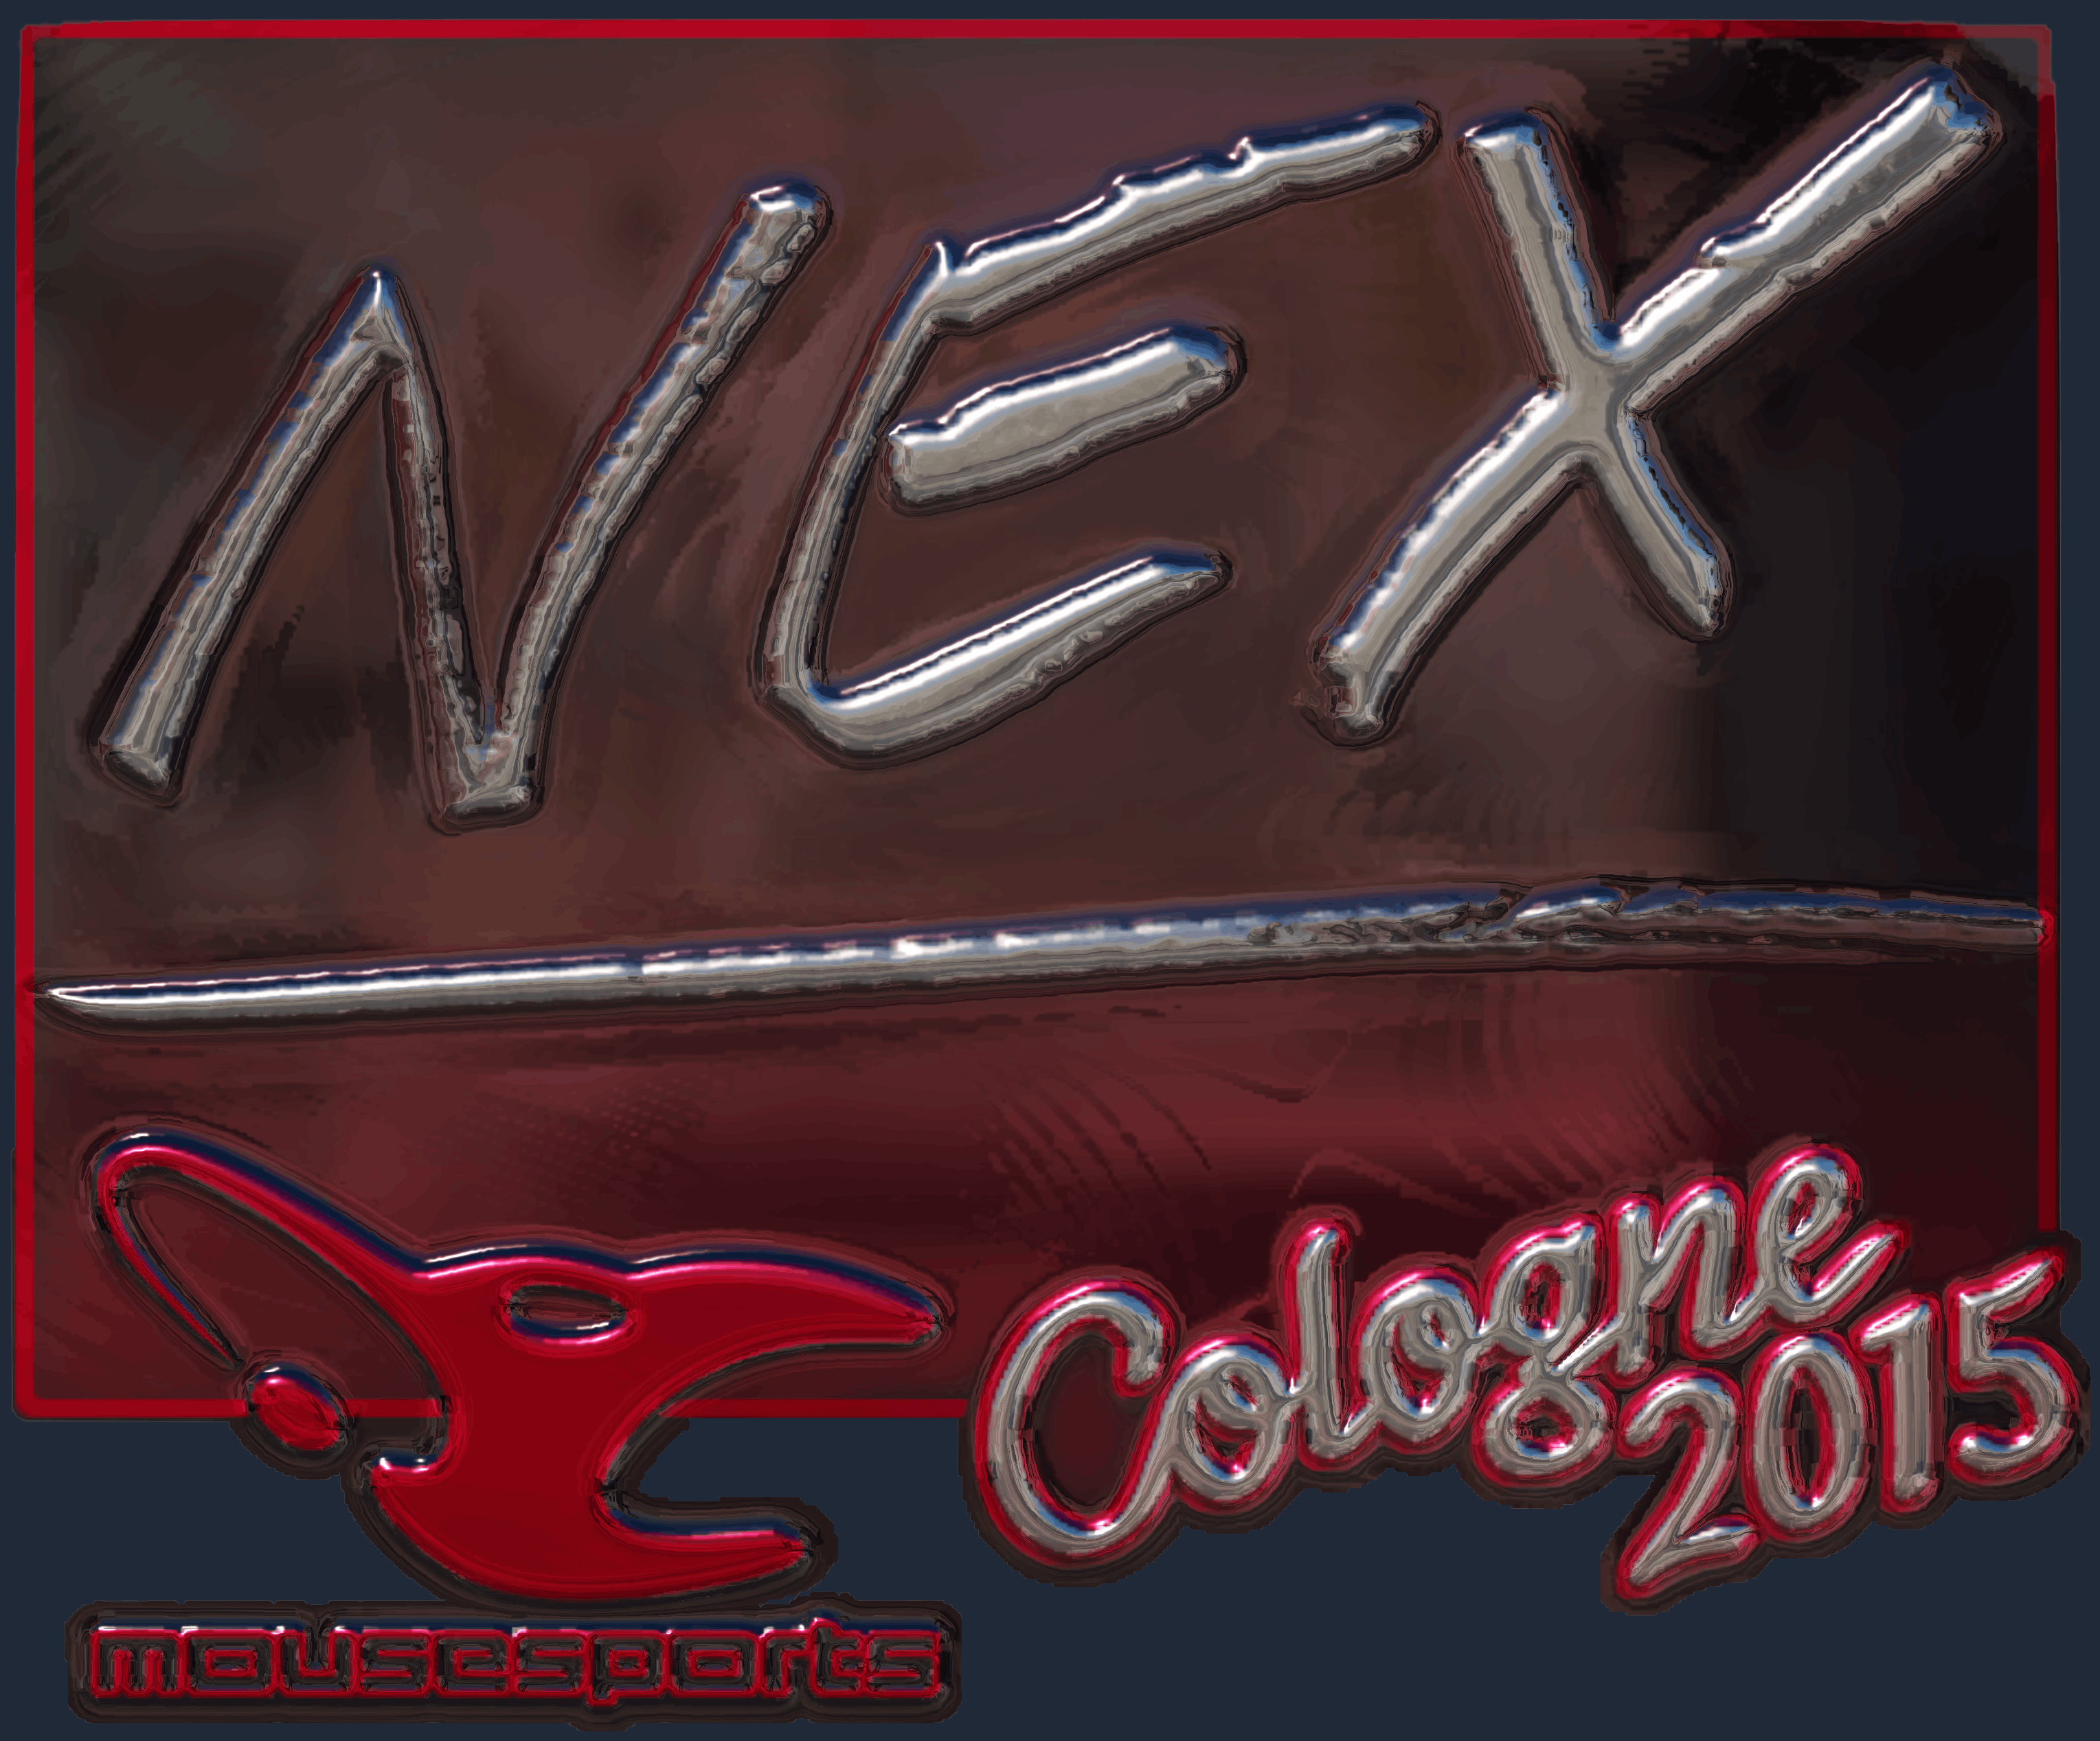 Sticker | nex (Foil) | Cologne 2015 Screenshot